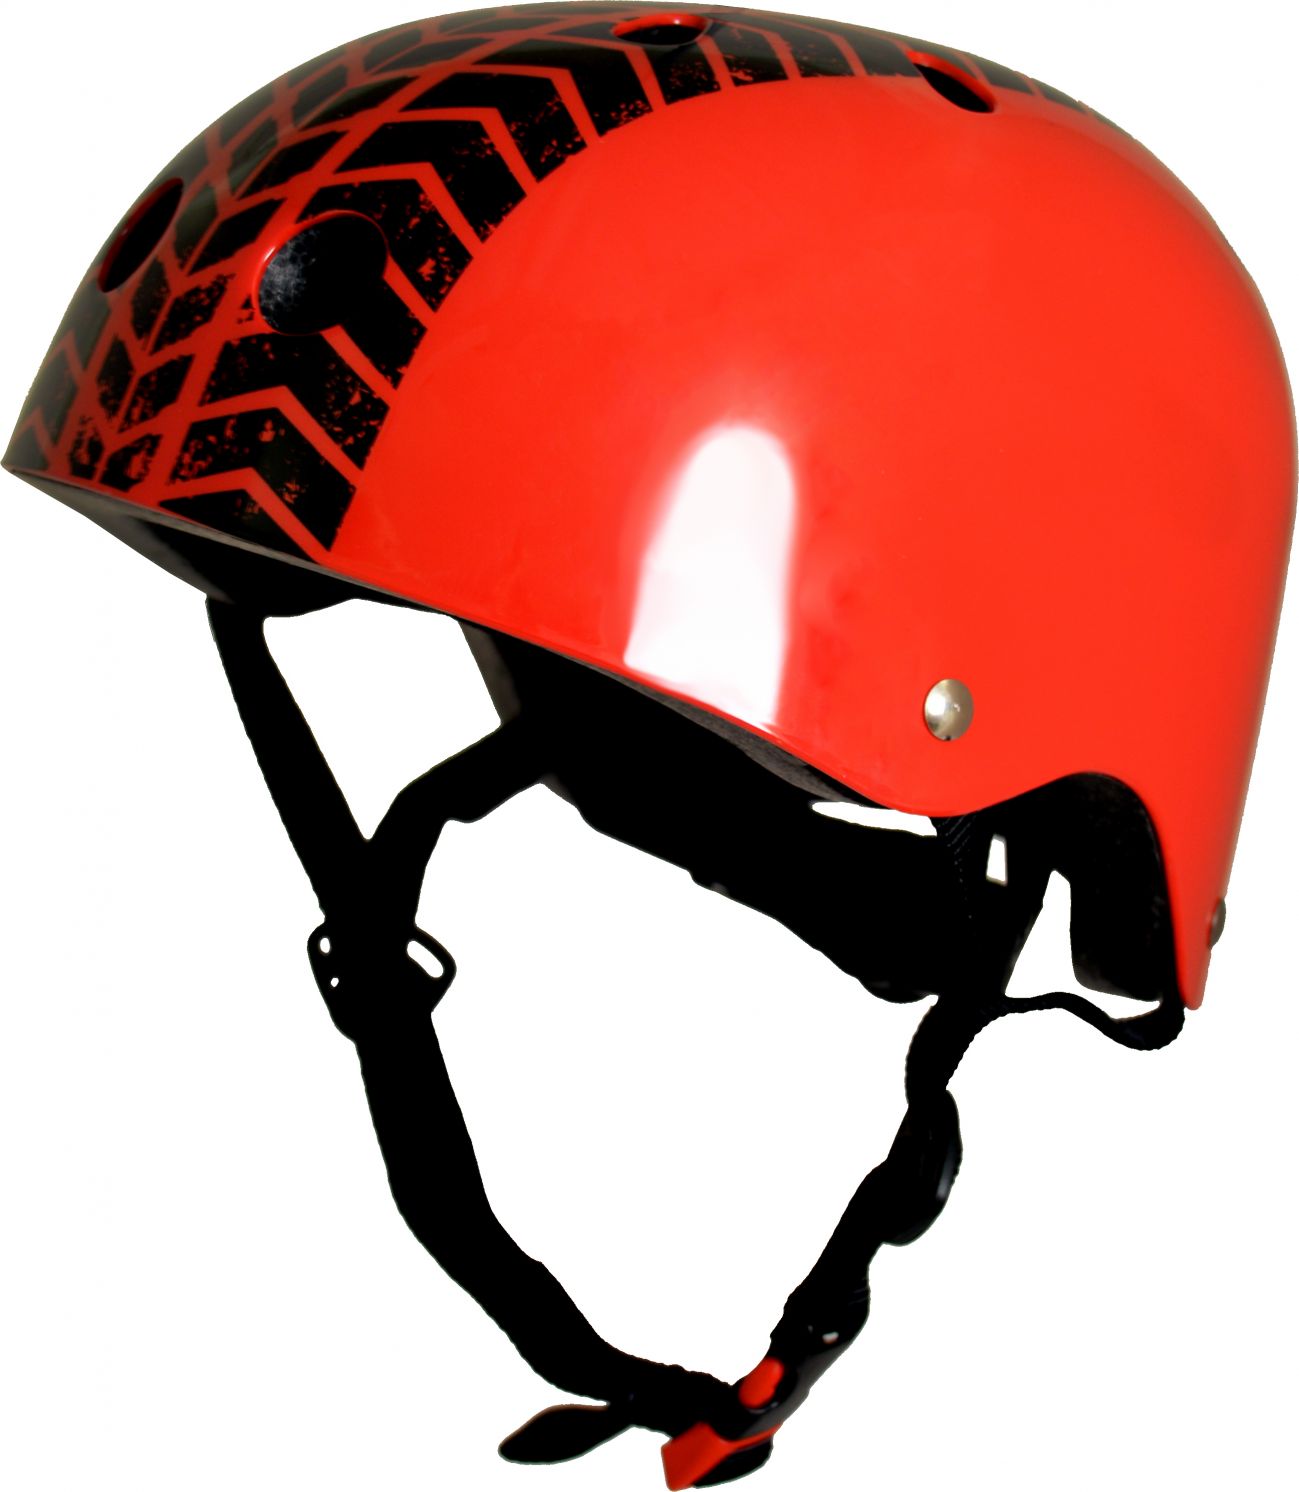 Шлем детский Kiddimoto с рисунком протектора, красный, размер S 48-53см фото 1